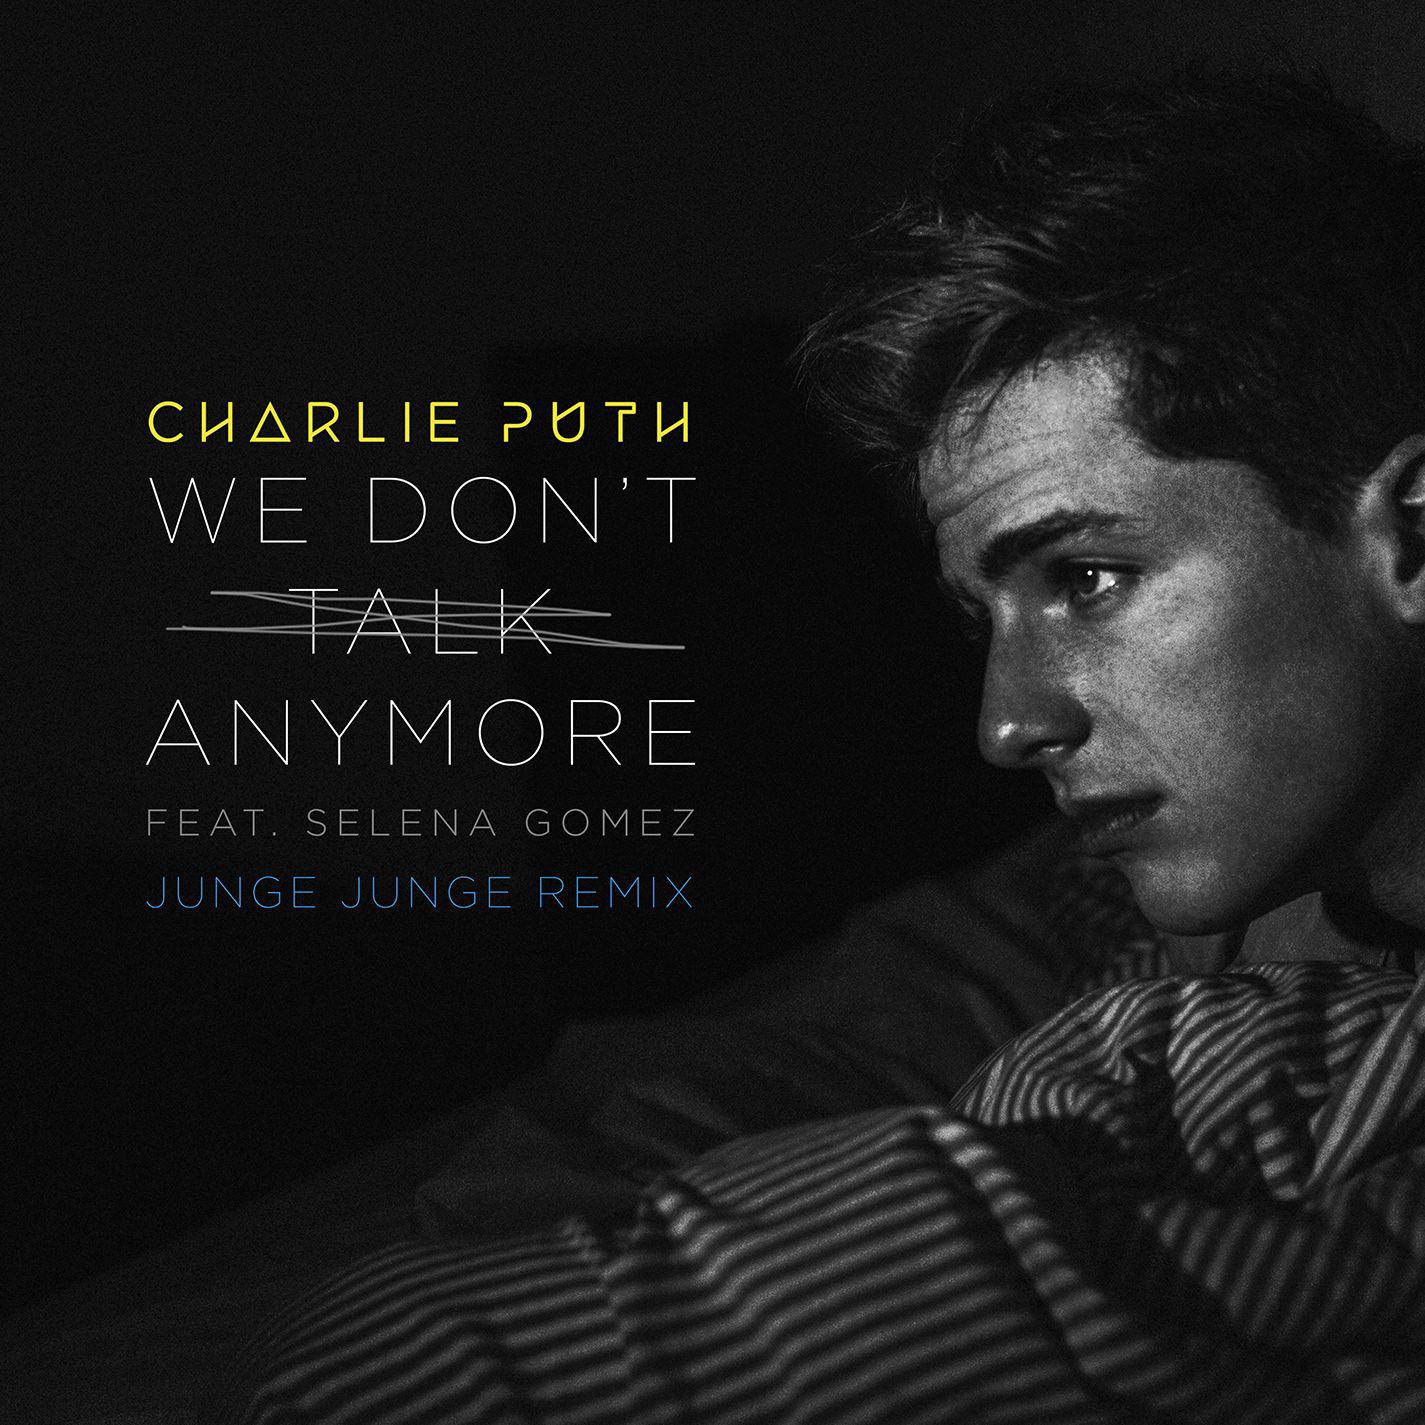 Charlie Puth - We Don't Talk Anymore (Junge Junge Remix)